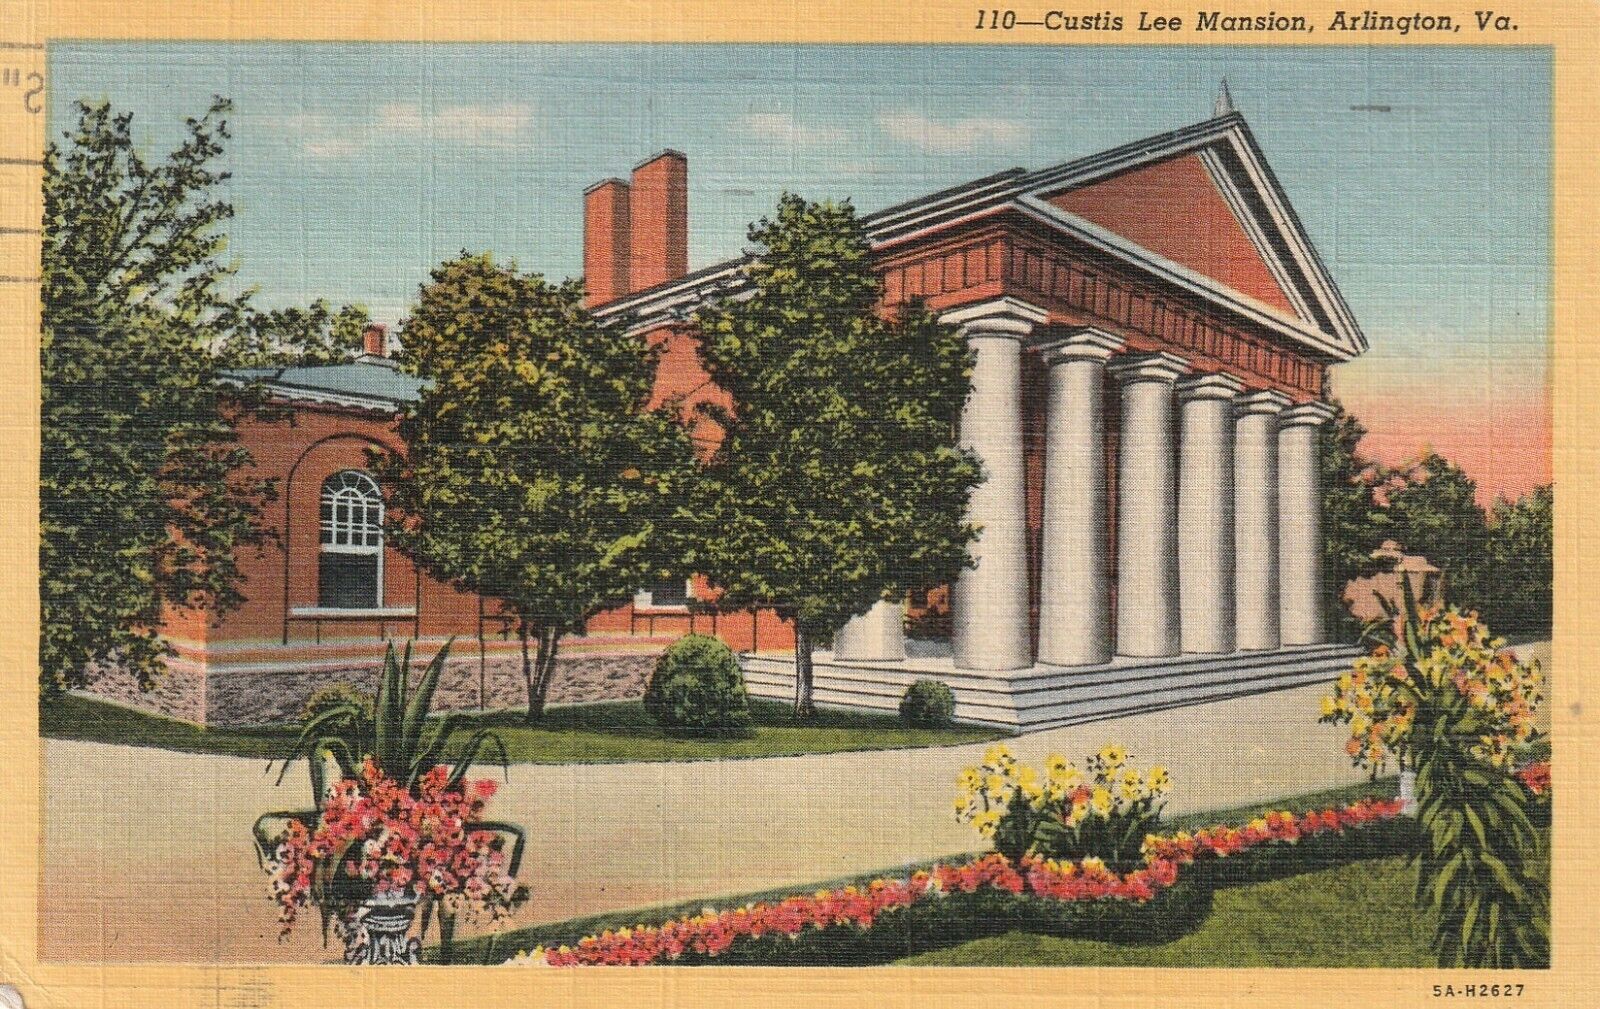 1951 Washington D.C., P.M./ The Curtis Lee Mansion at Arlington, VA. 1070